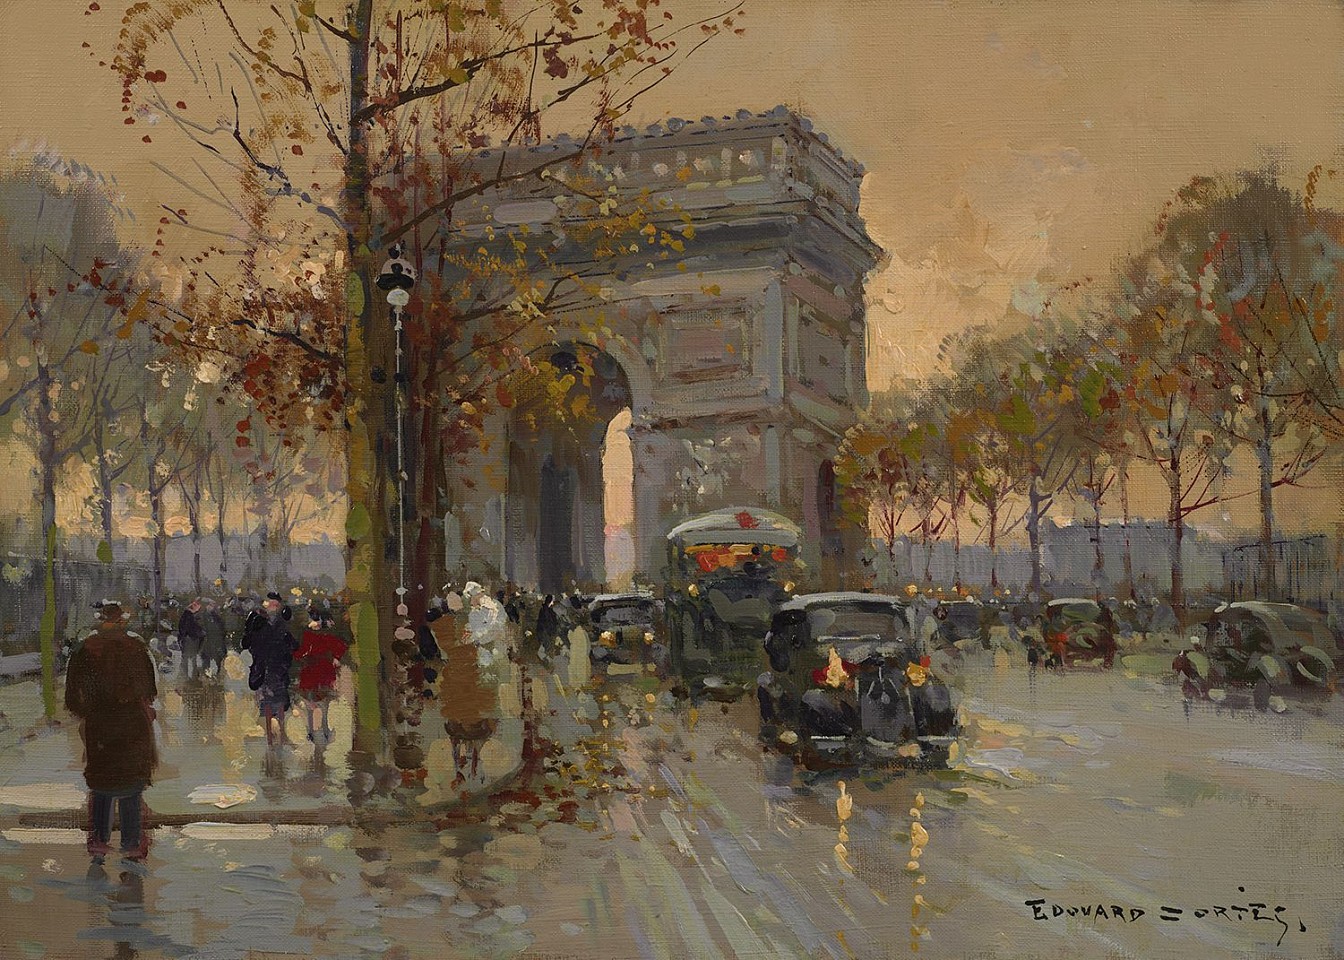 Edouard Leon Cortes, L'Arc de Triomphe vu de l'Avenue Friedland, 1950
oil on canvas, 13 x 18 in. (33 x 45.7 cm)
E1598